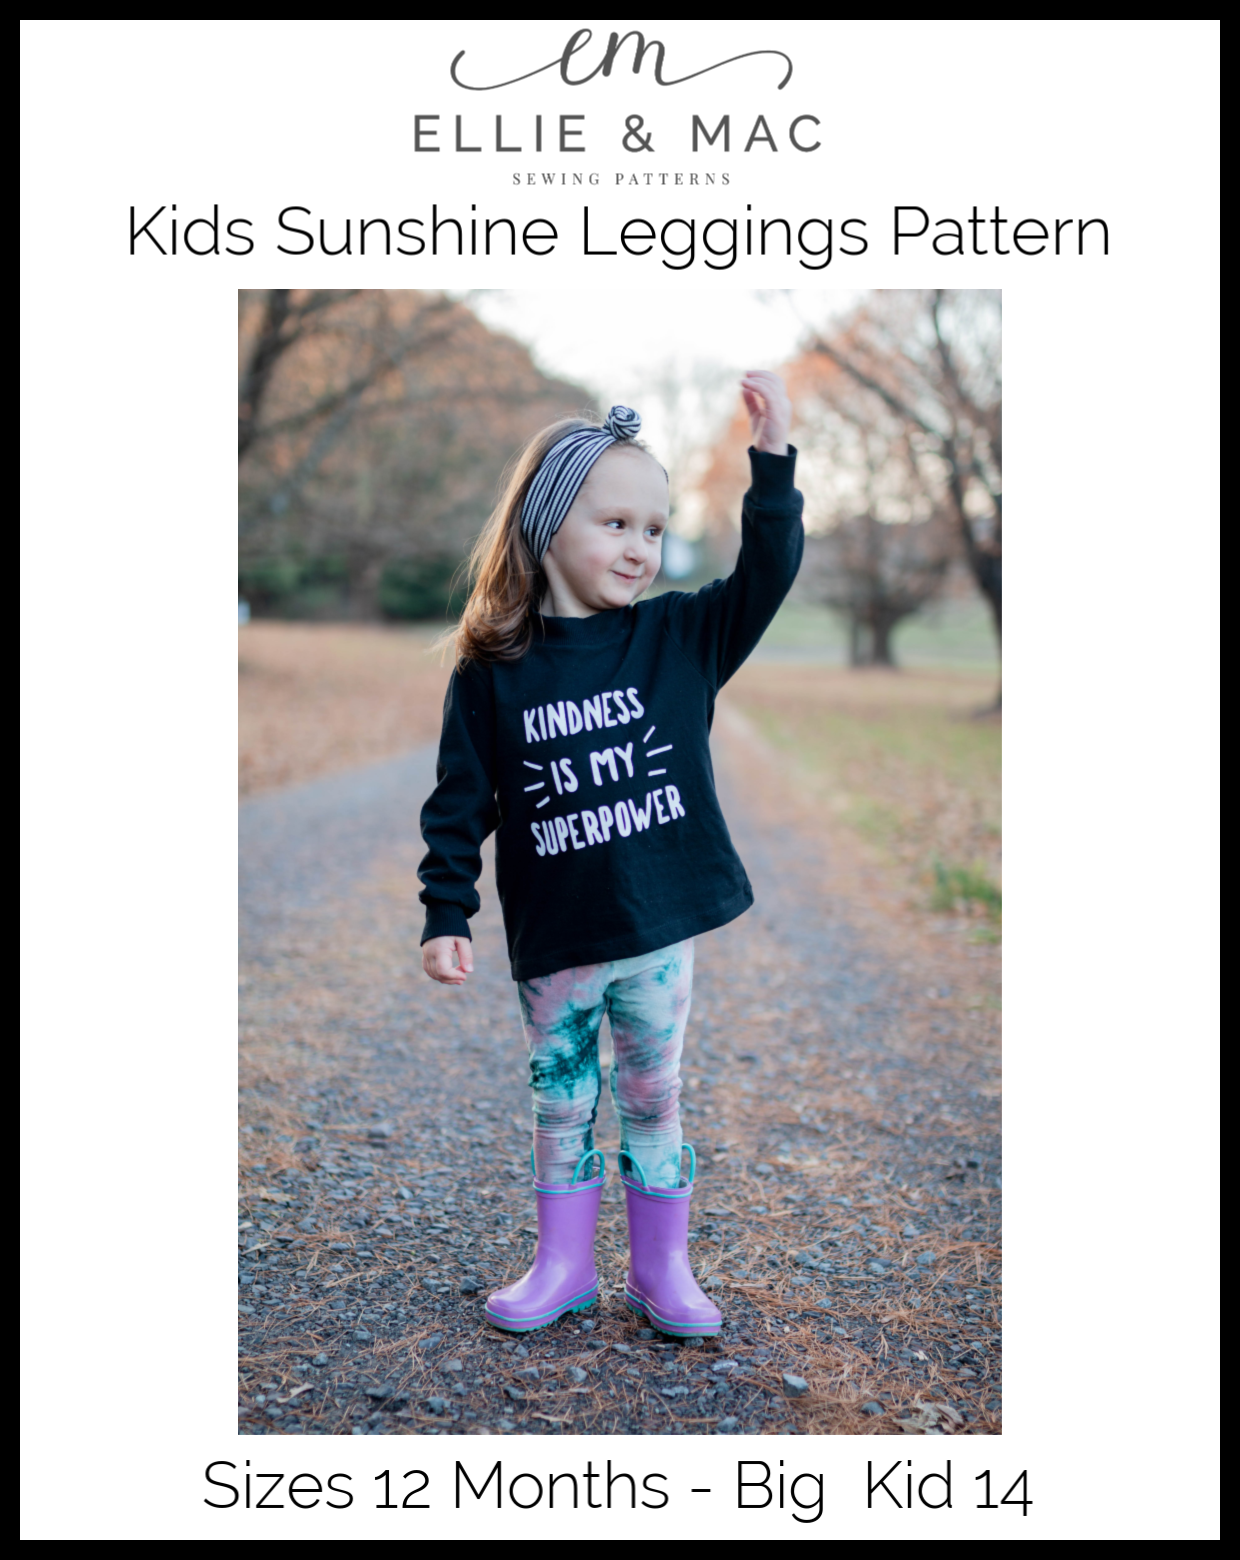 Baby and kids leggings sewing pattern PDF download, kids sewing